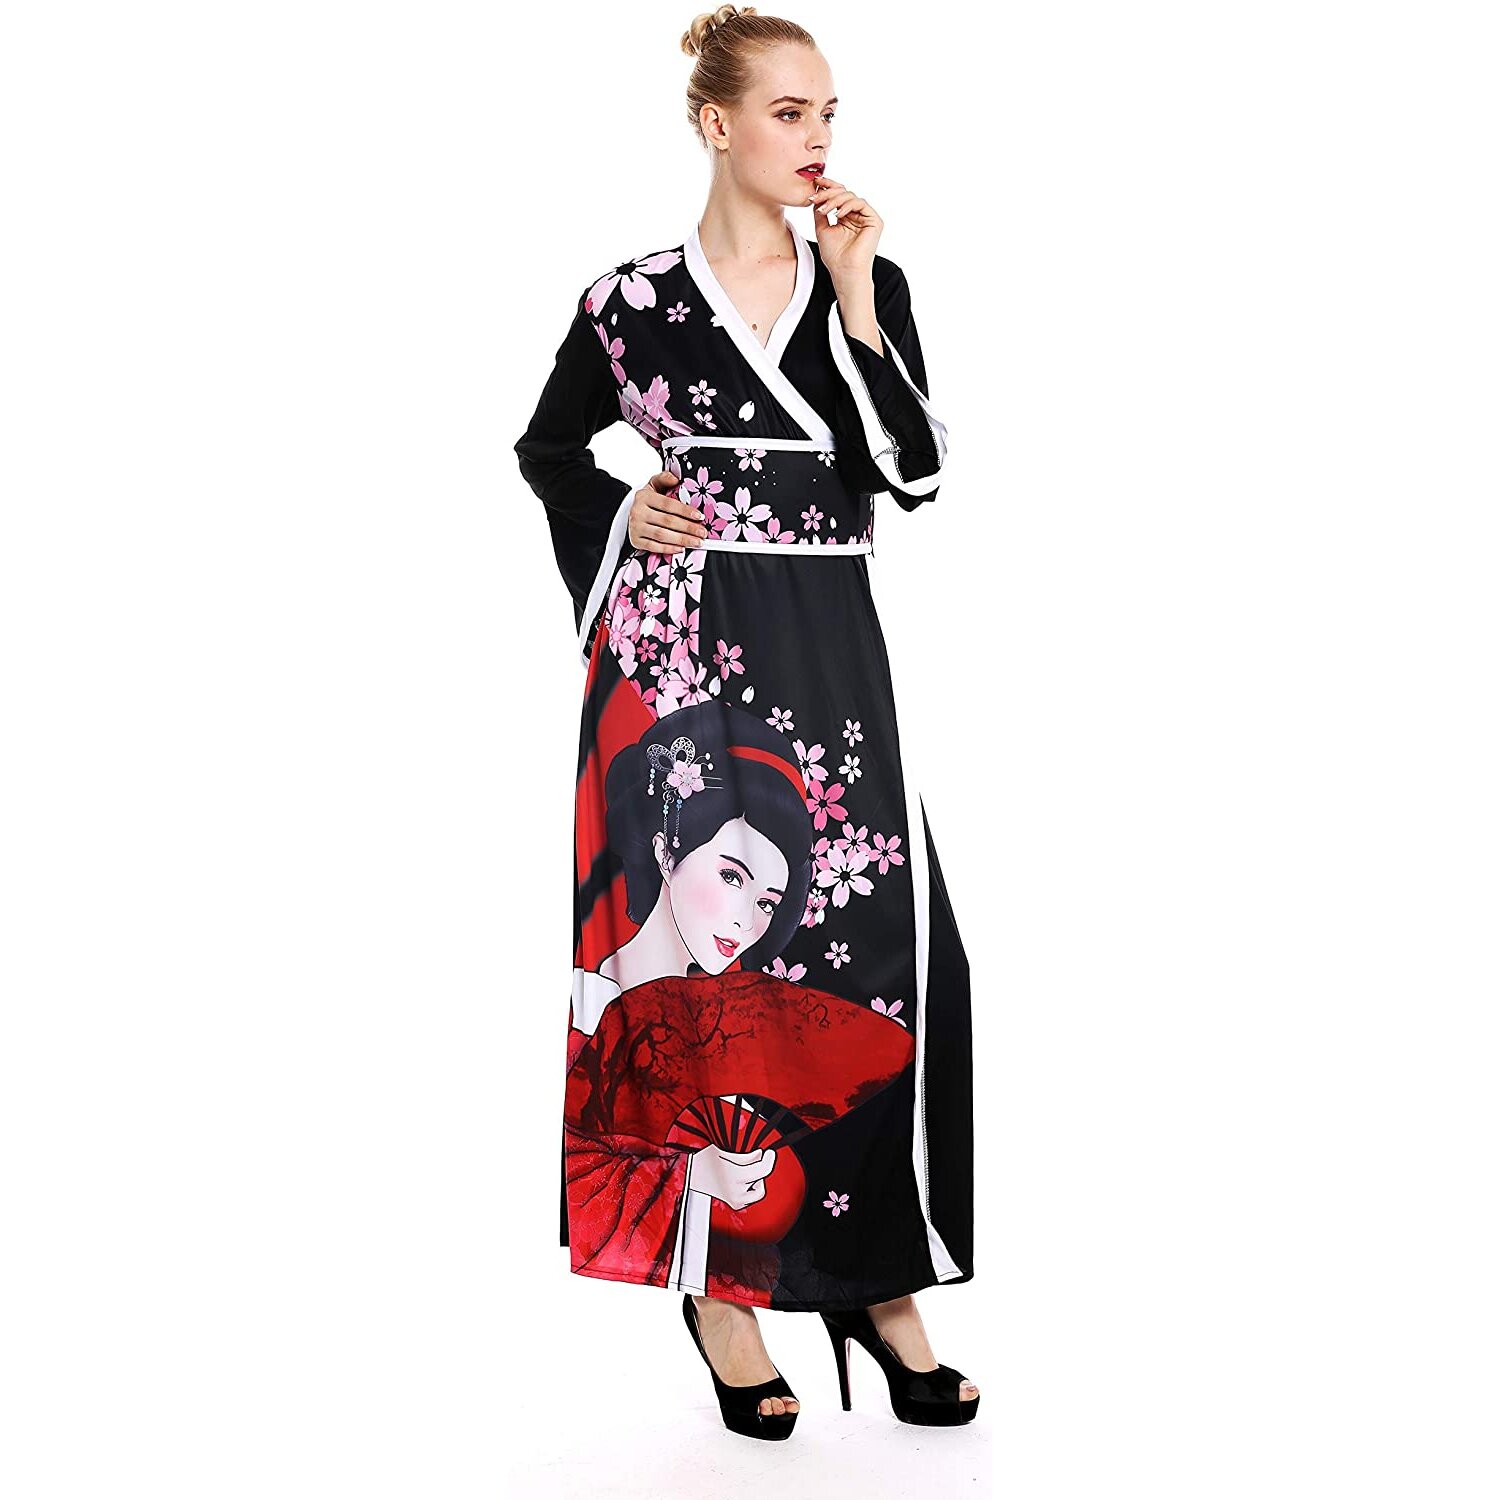 dressmeup - W-0288-S/M Lady Woman Costume Fancy Dress Halloween Kimono Japan Geisha Japanese China Girl Size S/M